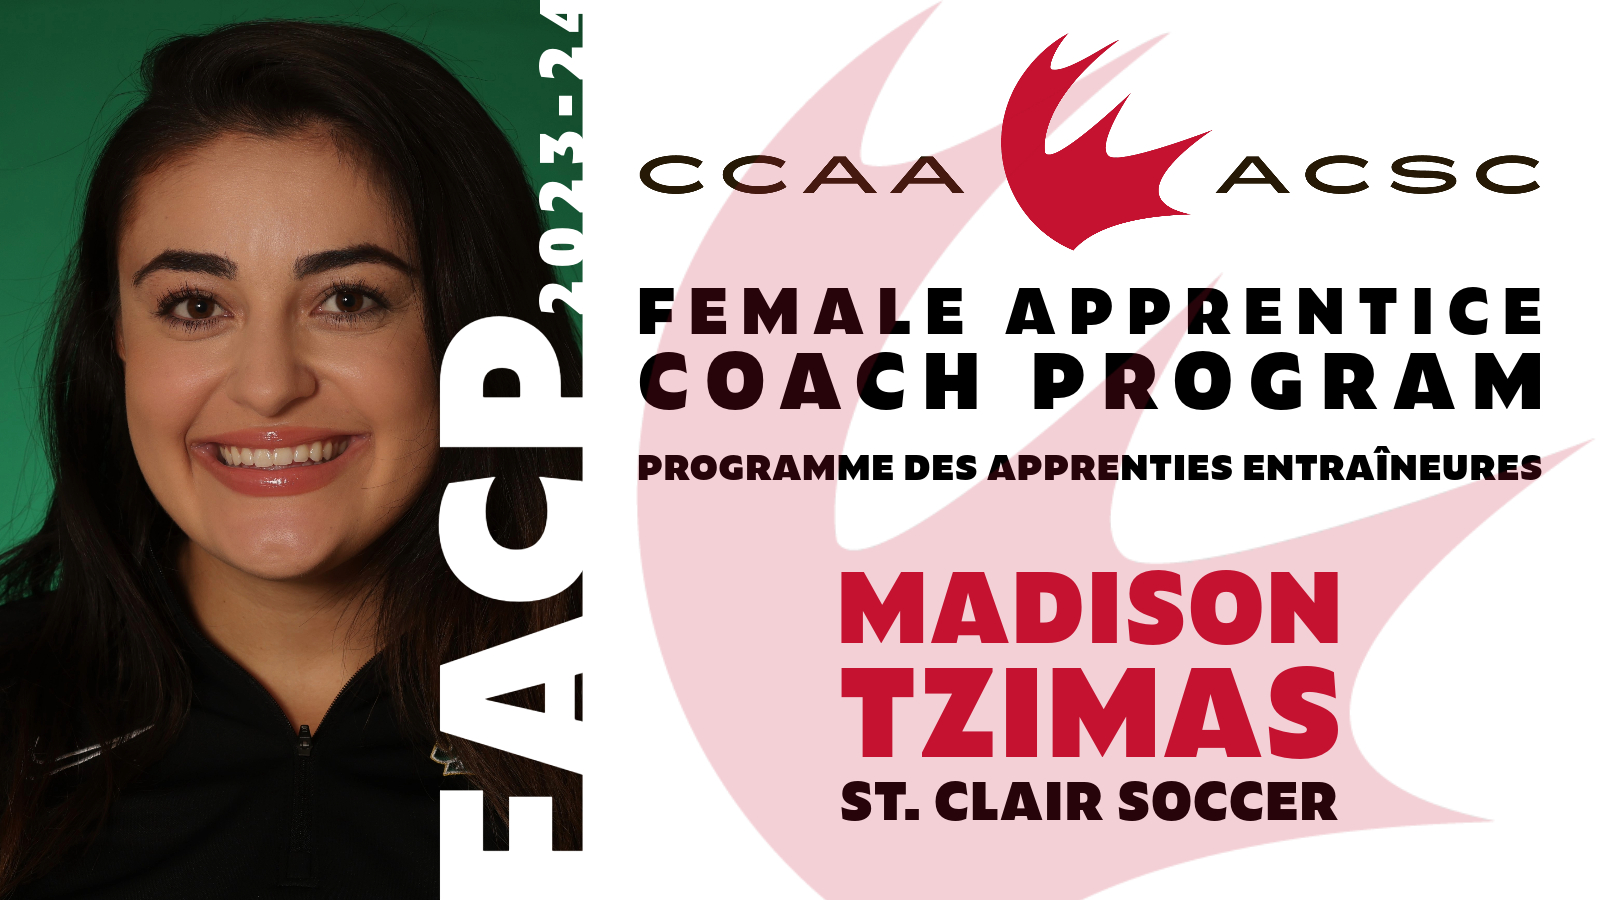 CCAA Soccer apprentice: Madison Tzimas